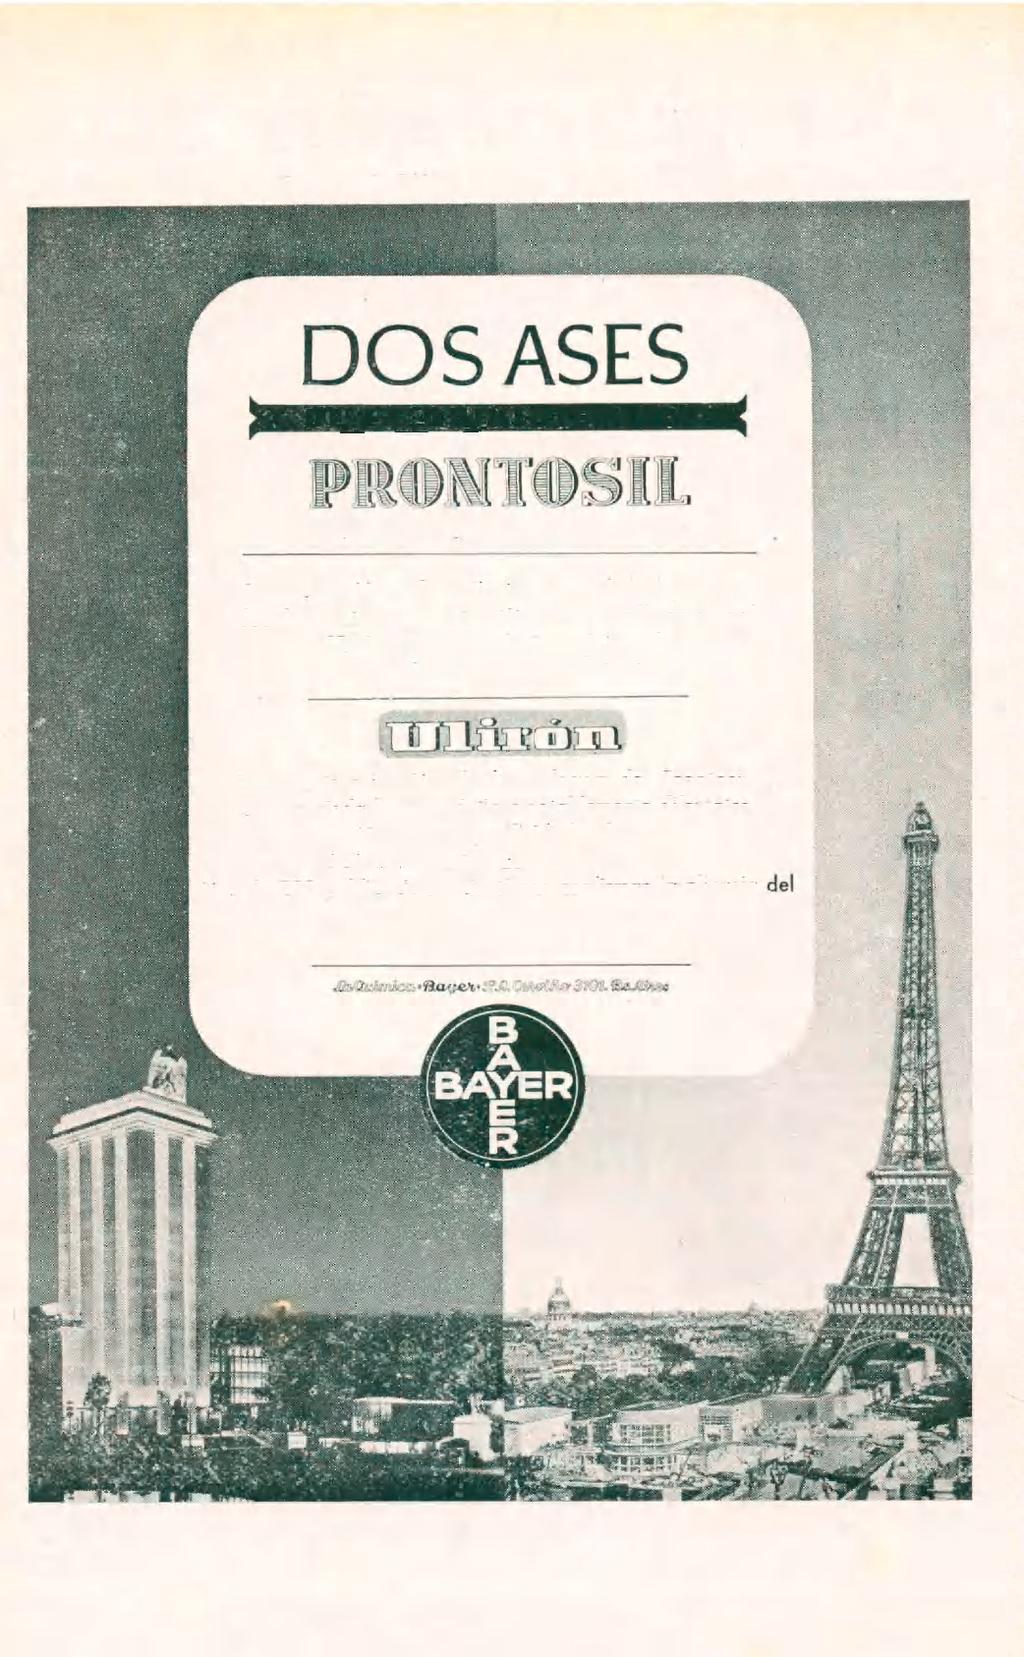 D E, I-A. Q U LM I O T 5 R. A P I A OBTUVO EL PRIMER PREMIO EN LA EXPOSICION MUNDIAL Oí PARIS 1937.